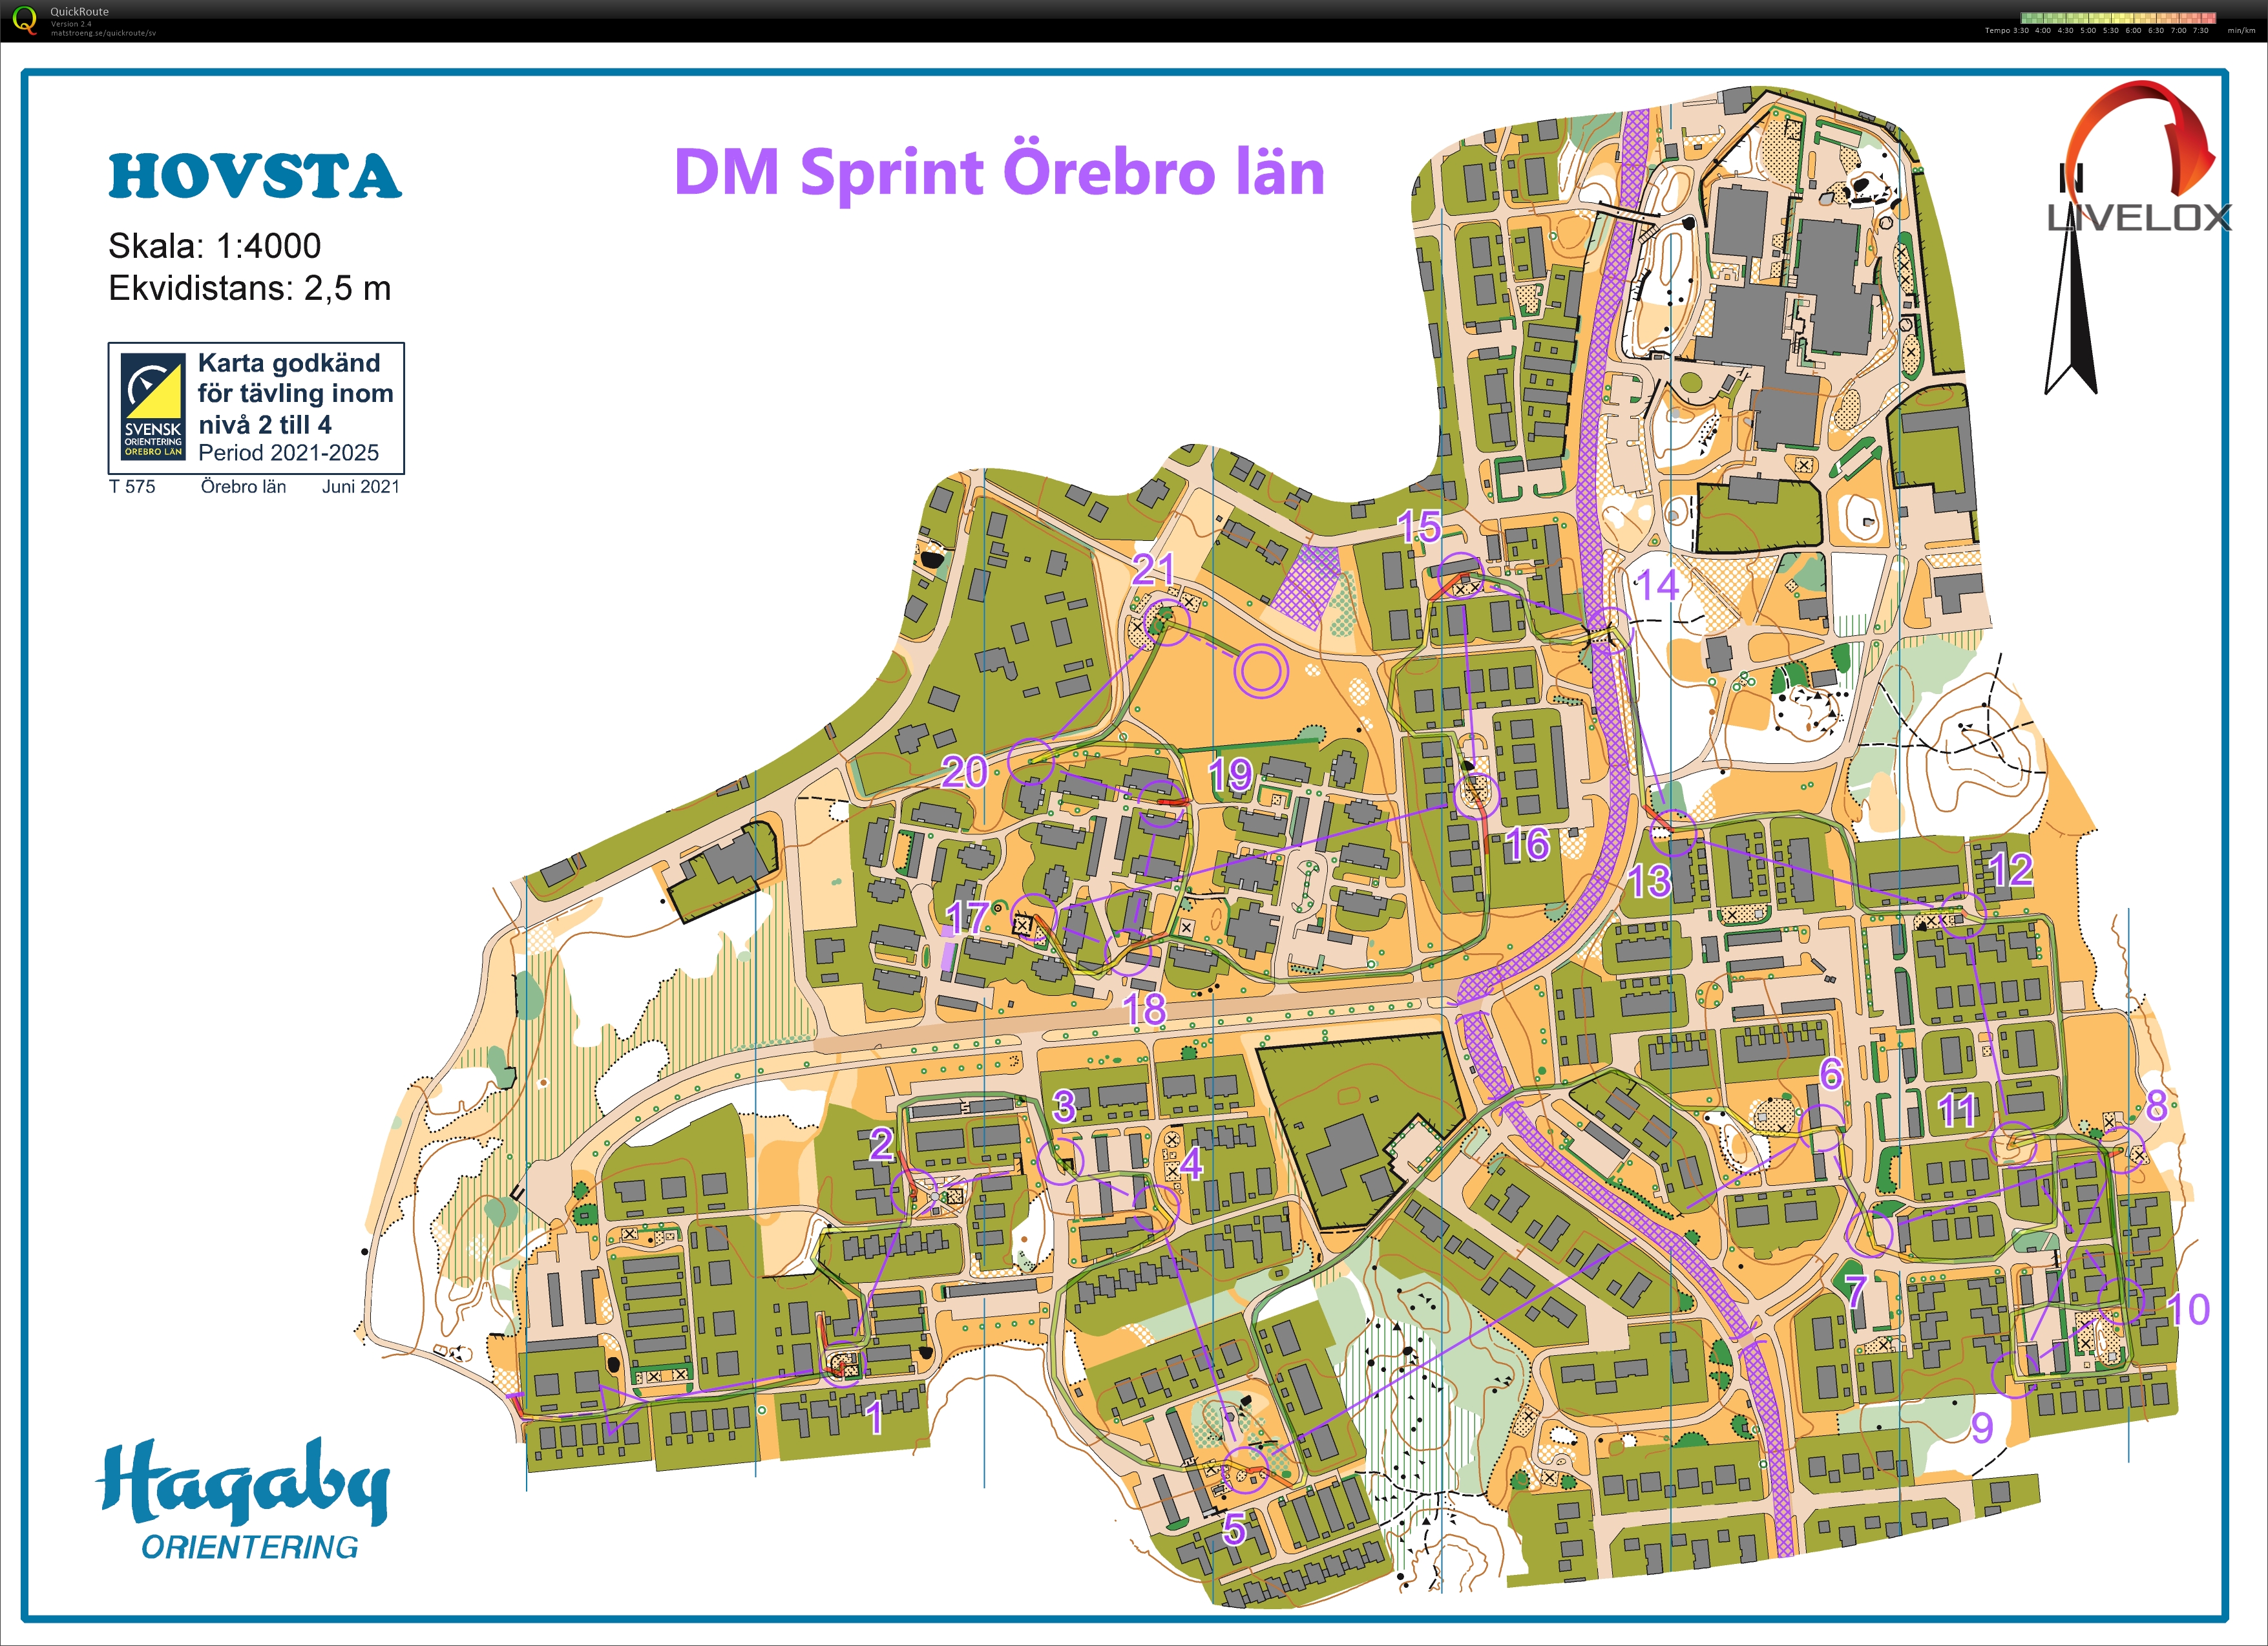 DM sprint Örebro (12/06/2021)